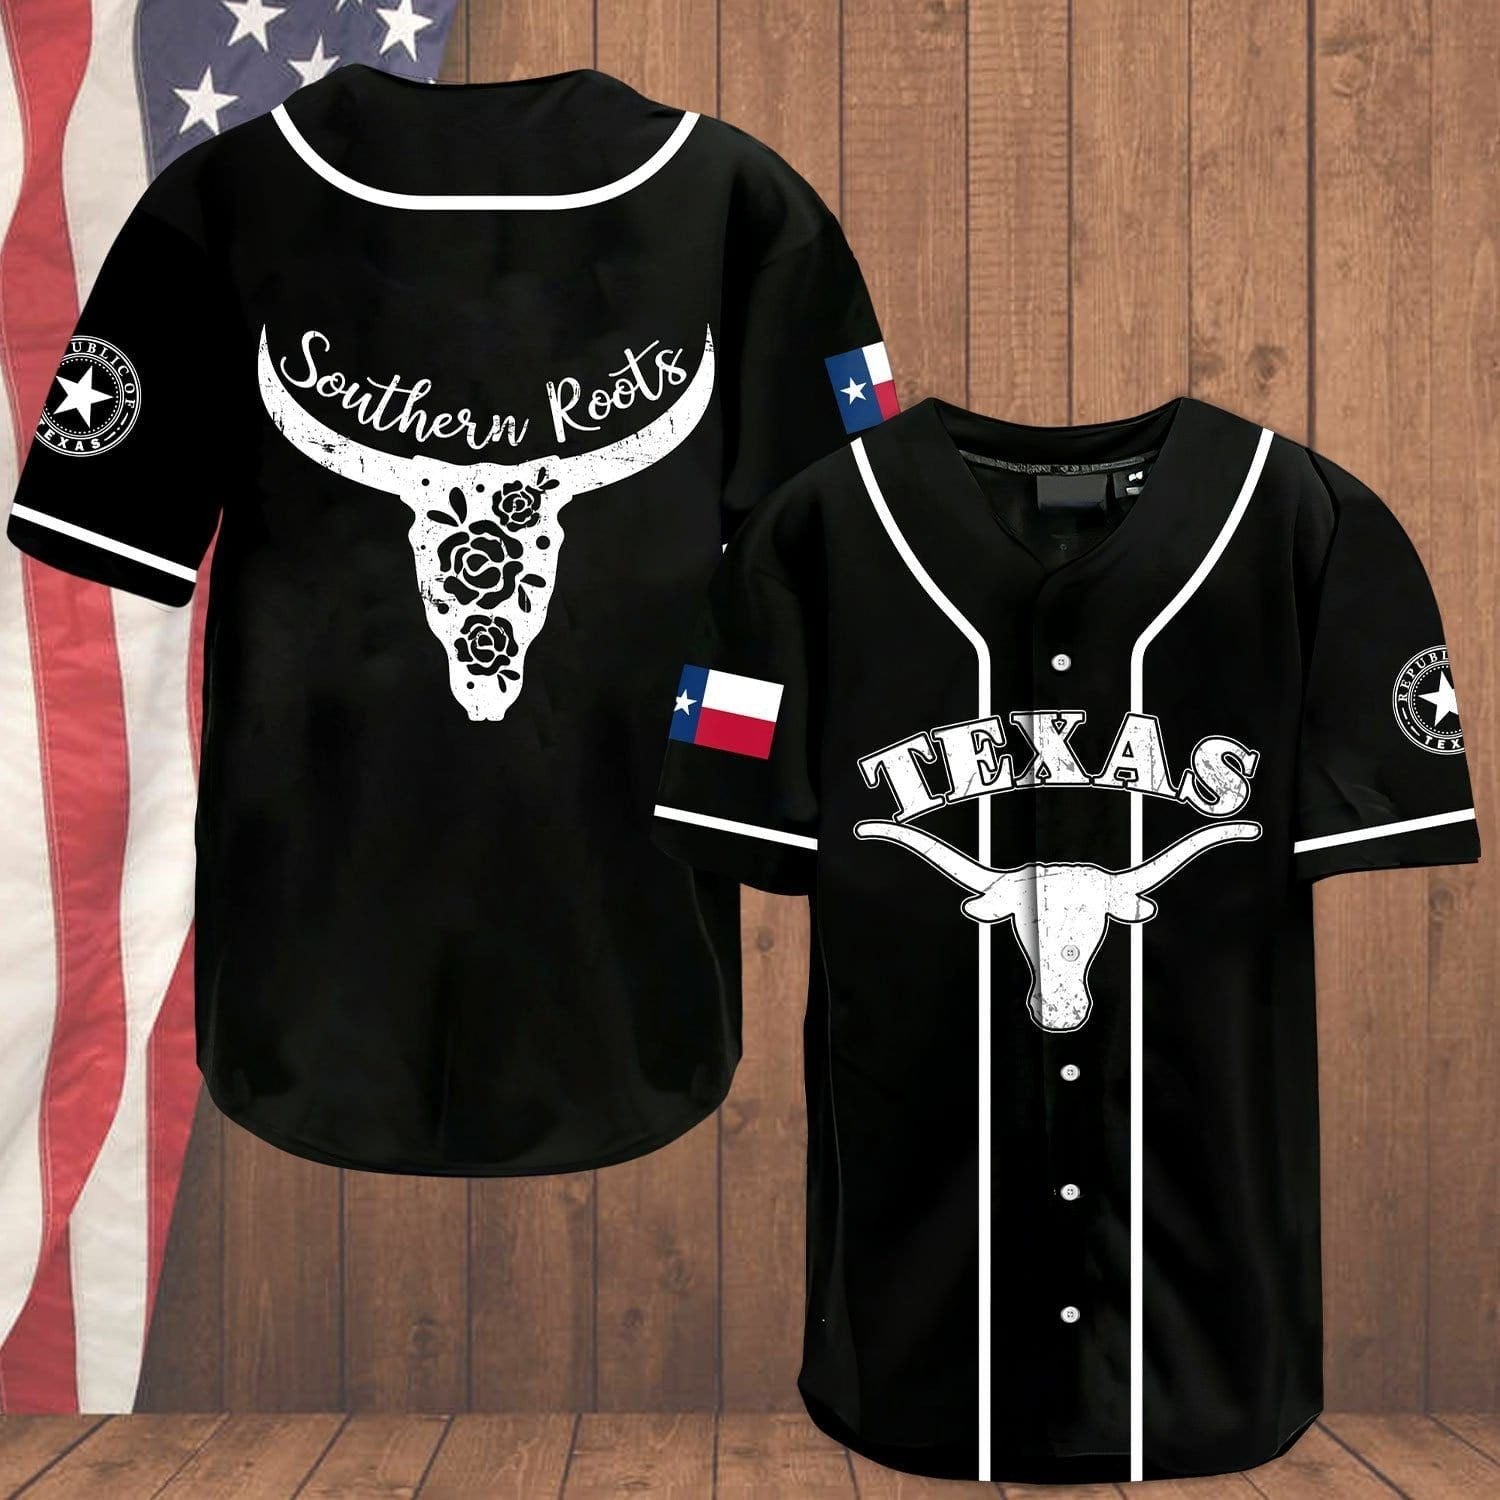 Texas Southern Roots Baseball Jersey/ Texas Black and White Baseball Shirt